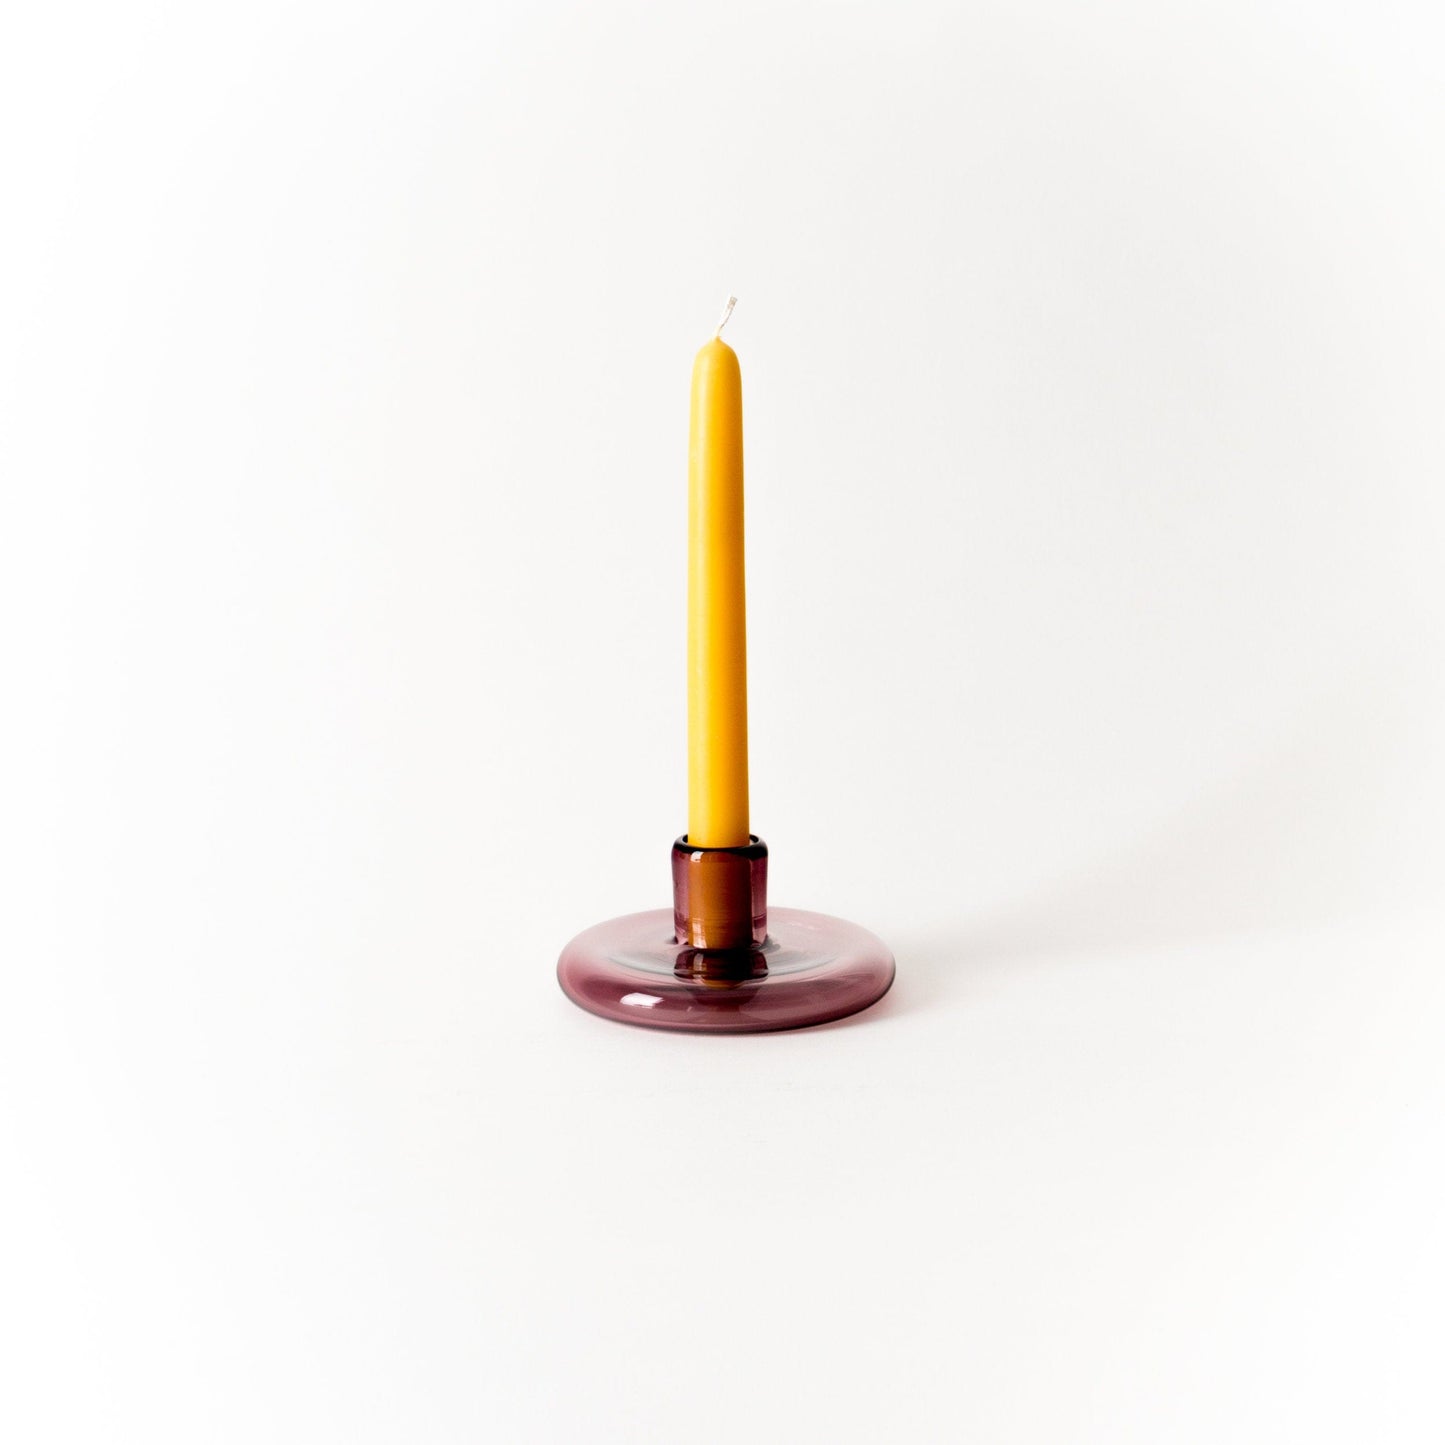 Rose colored handblown glass candlestick holder